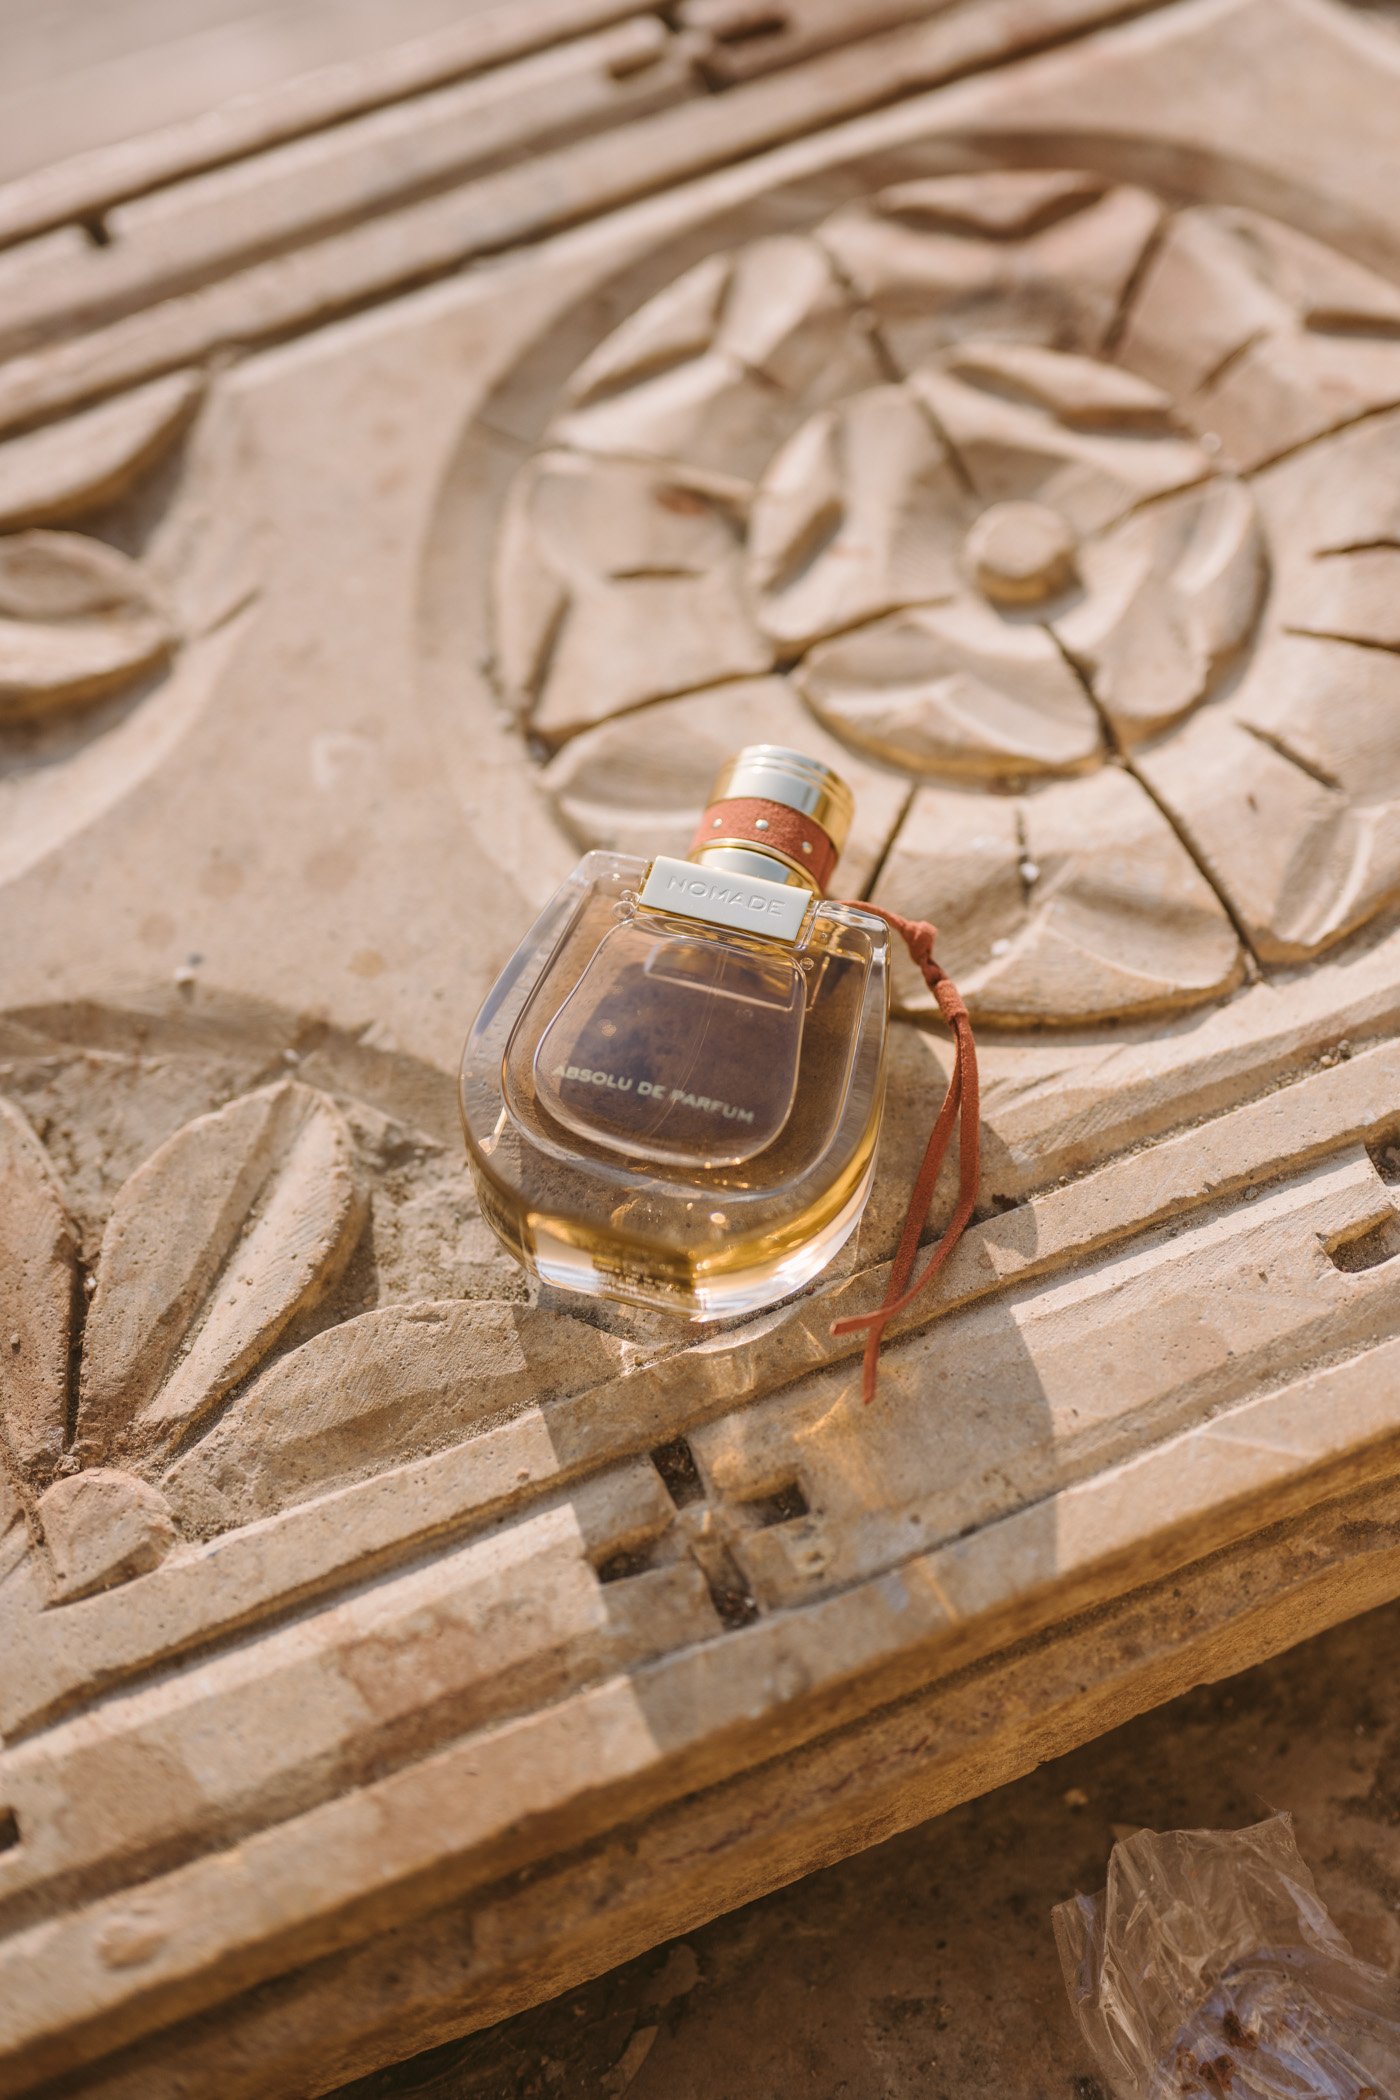 Chloé NOMADE Absolu de Parfum in Rajasthan India